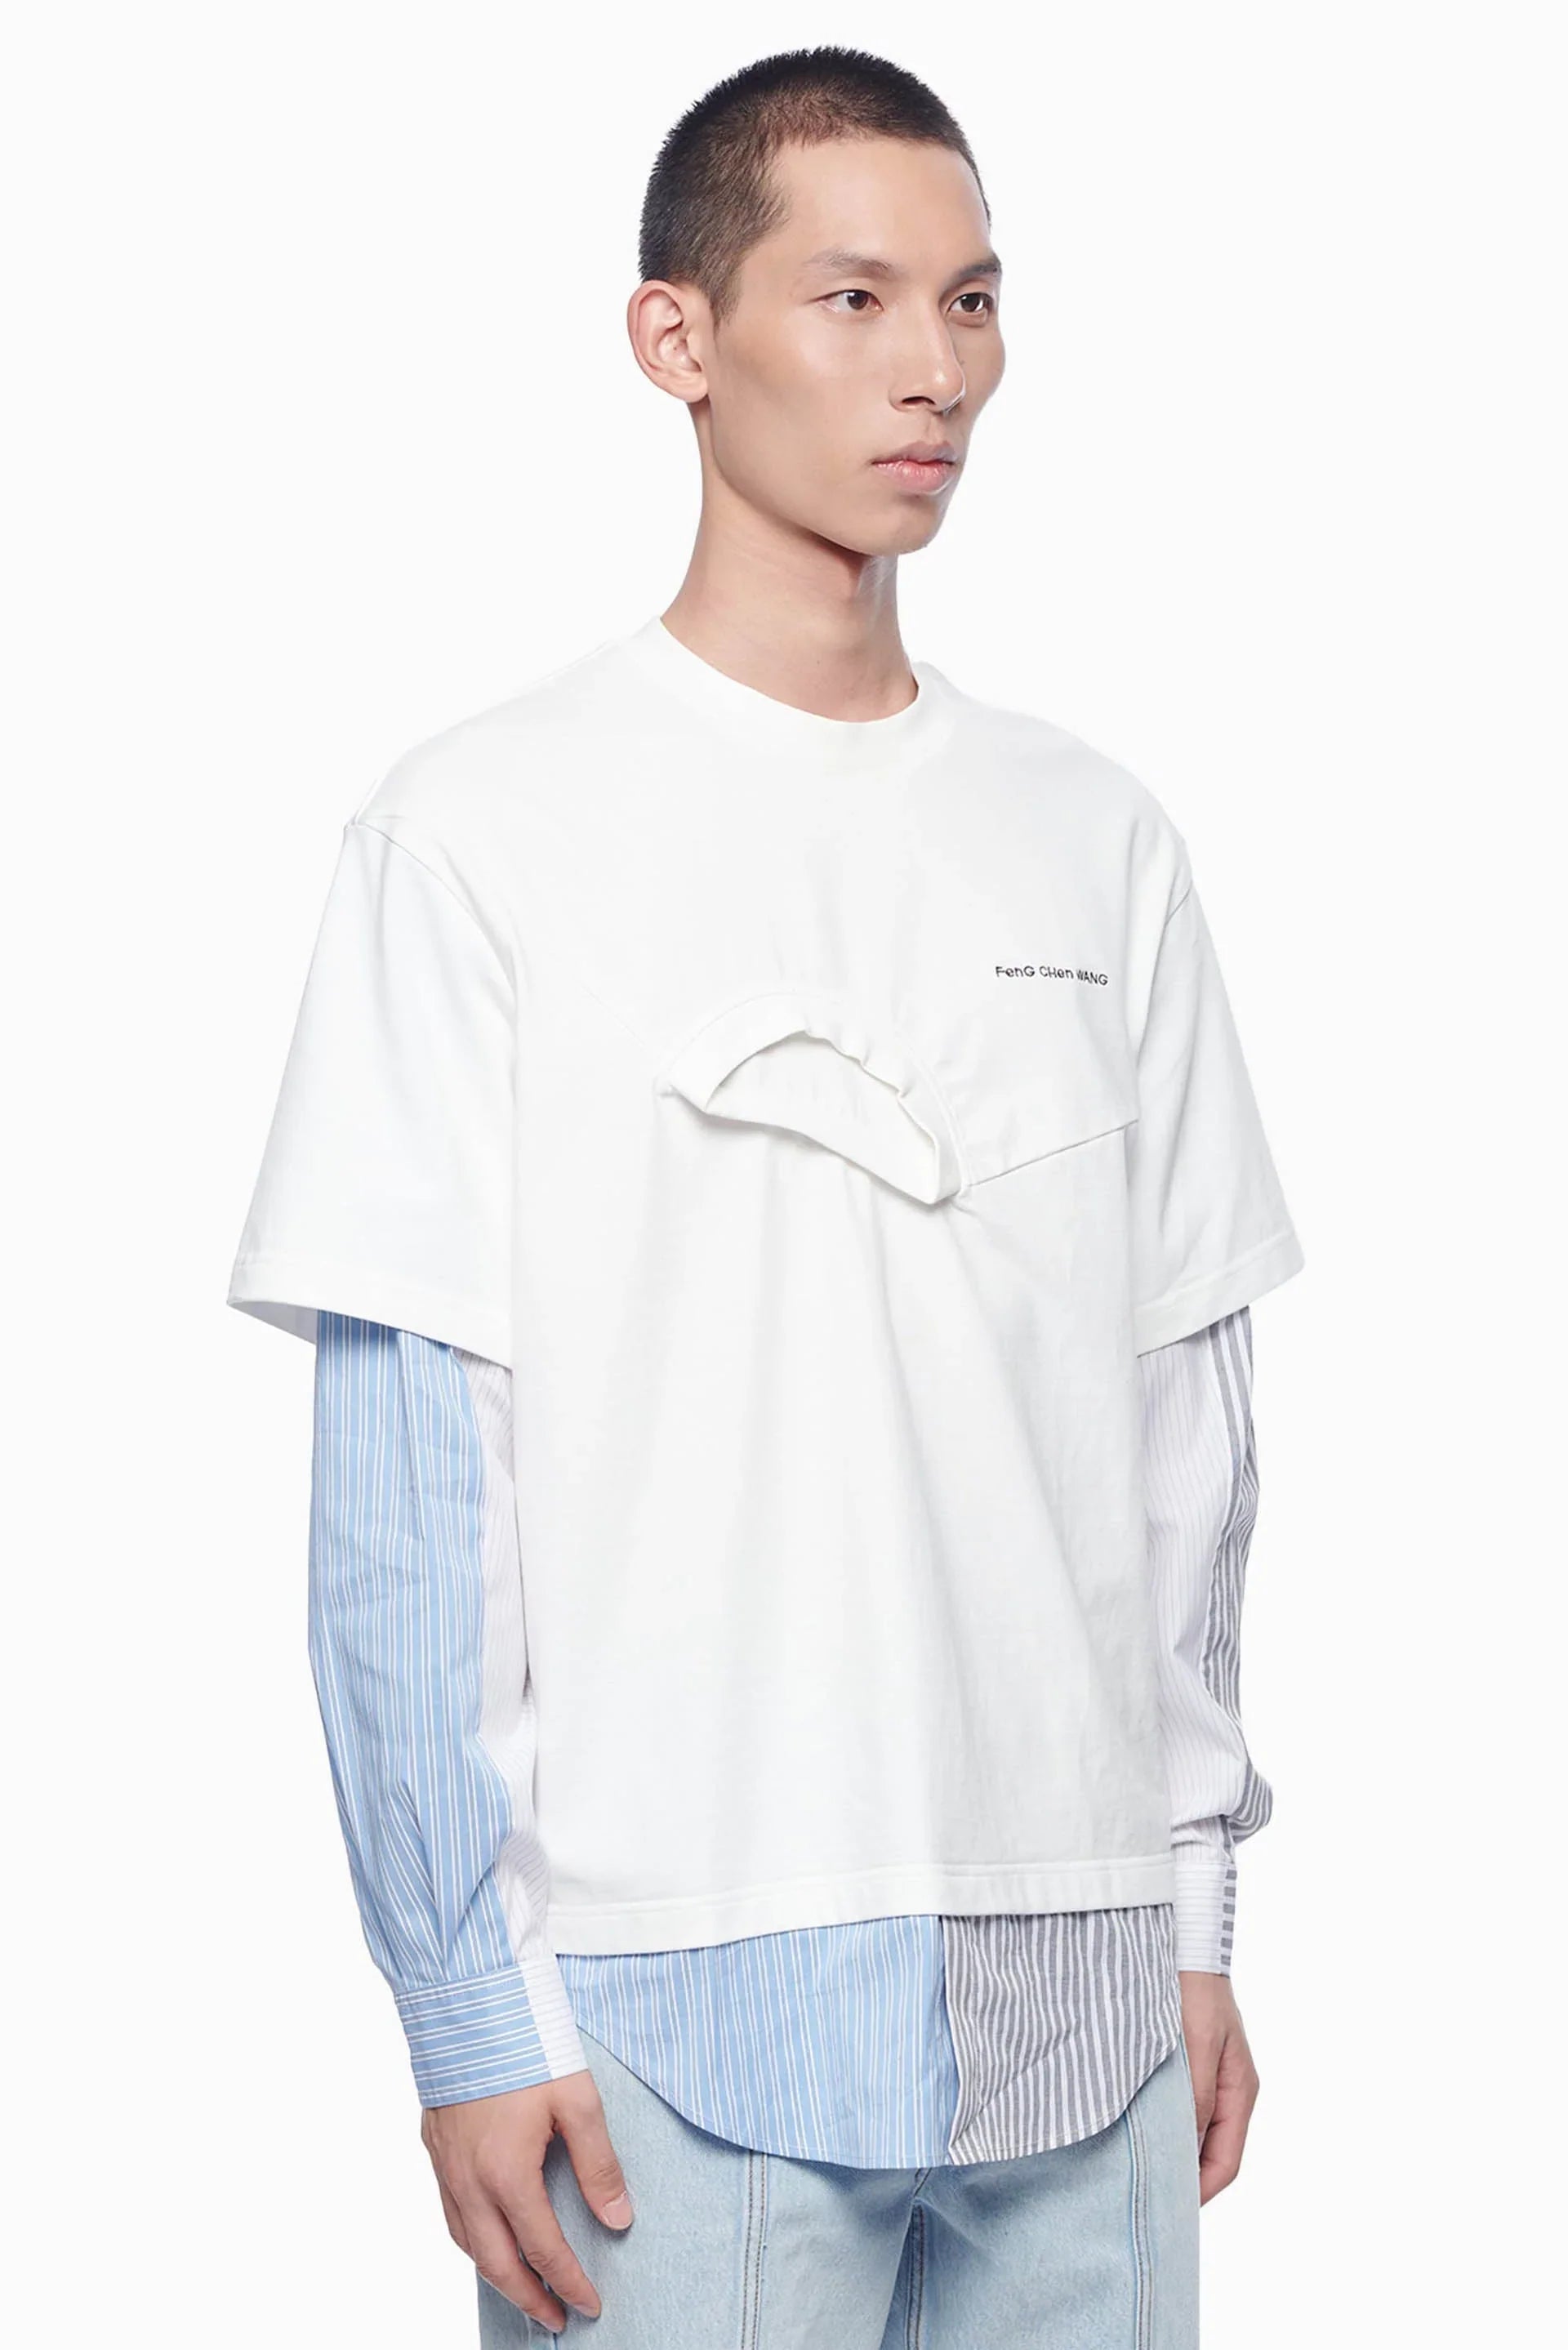 Feng Chen Wang Shirt Panelled Sweater | UJNG